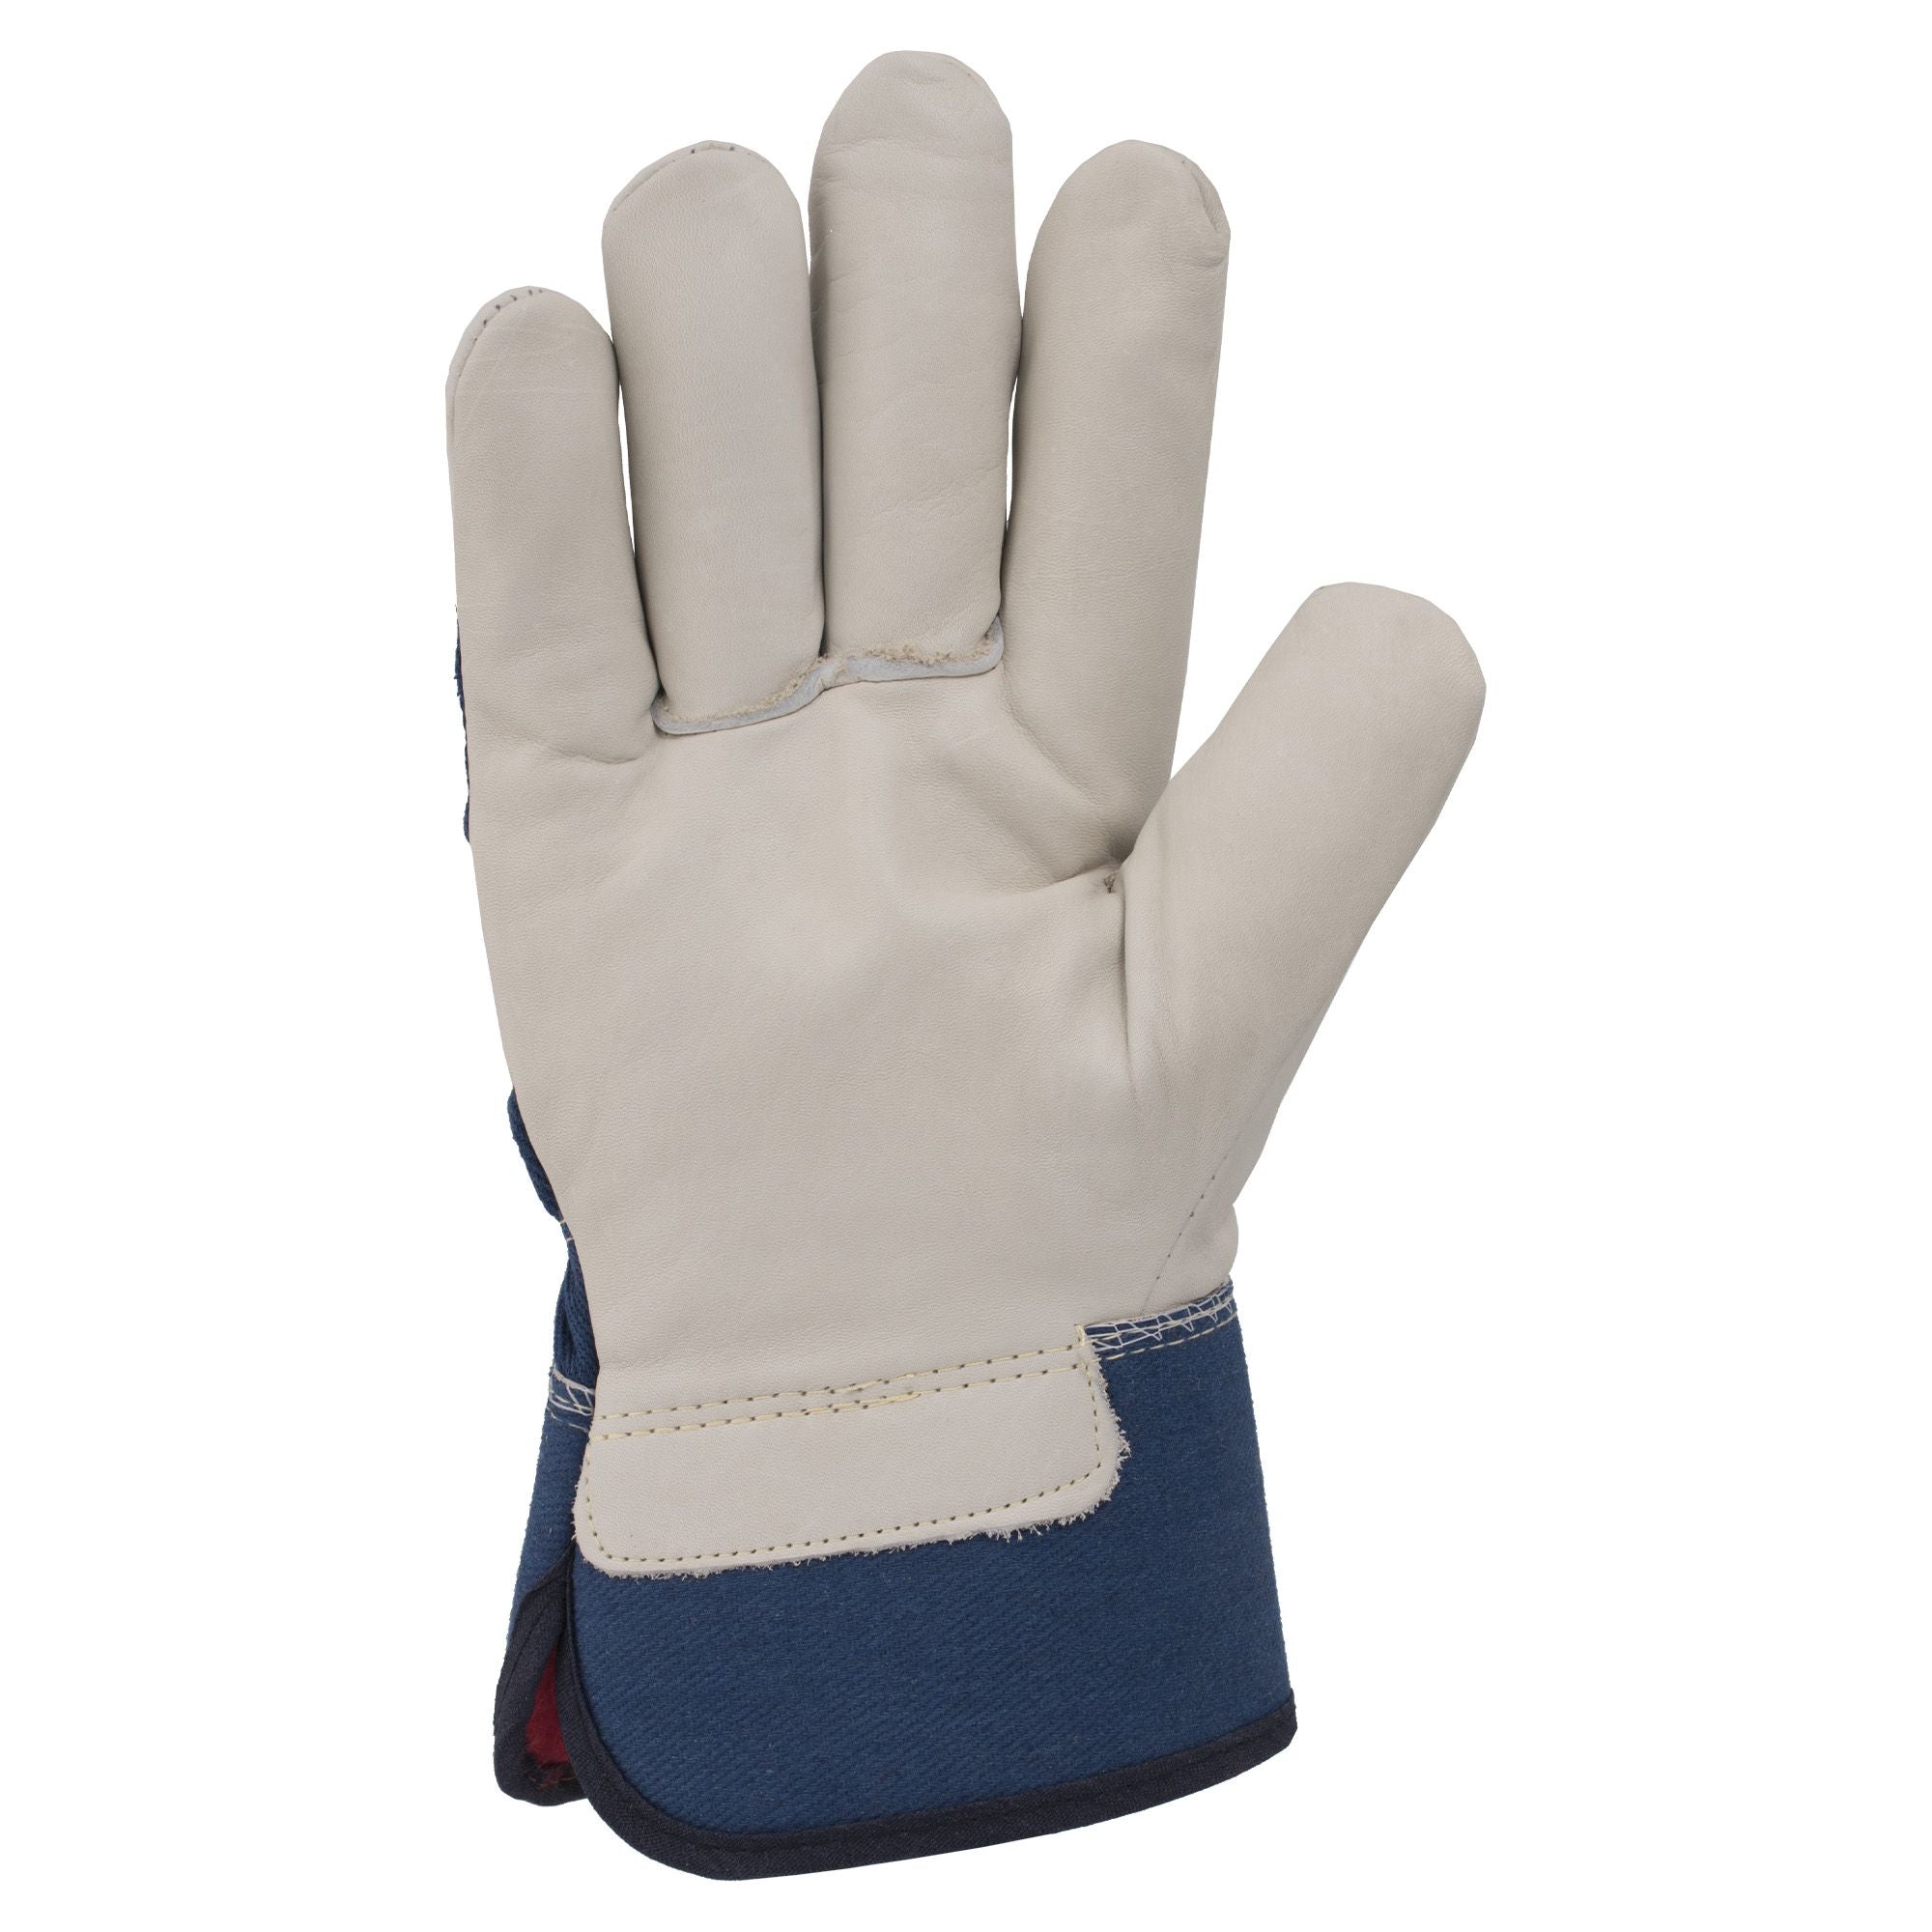 Horizon Cotton Duck Back Foam/Fleece Lined Cowhide Winter Work Gloves with Rubberized Safety Cuff